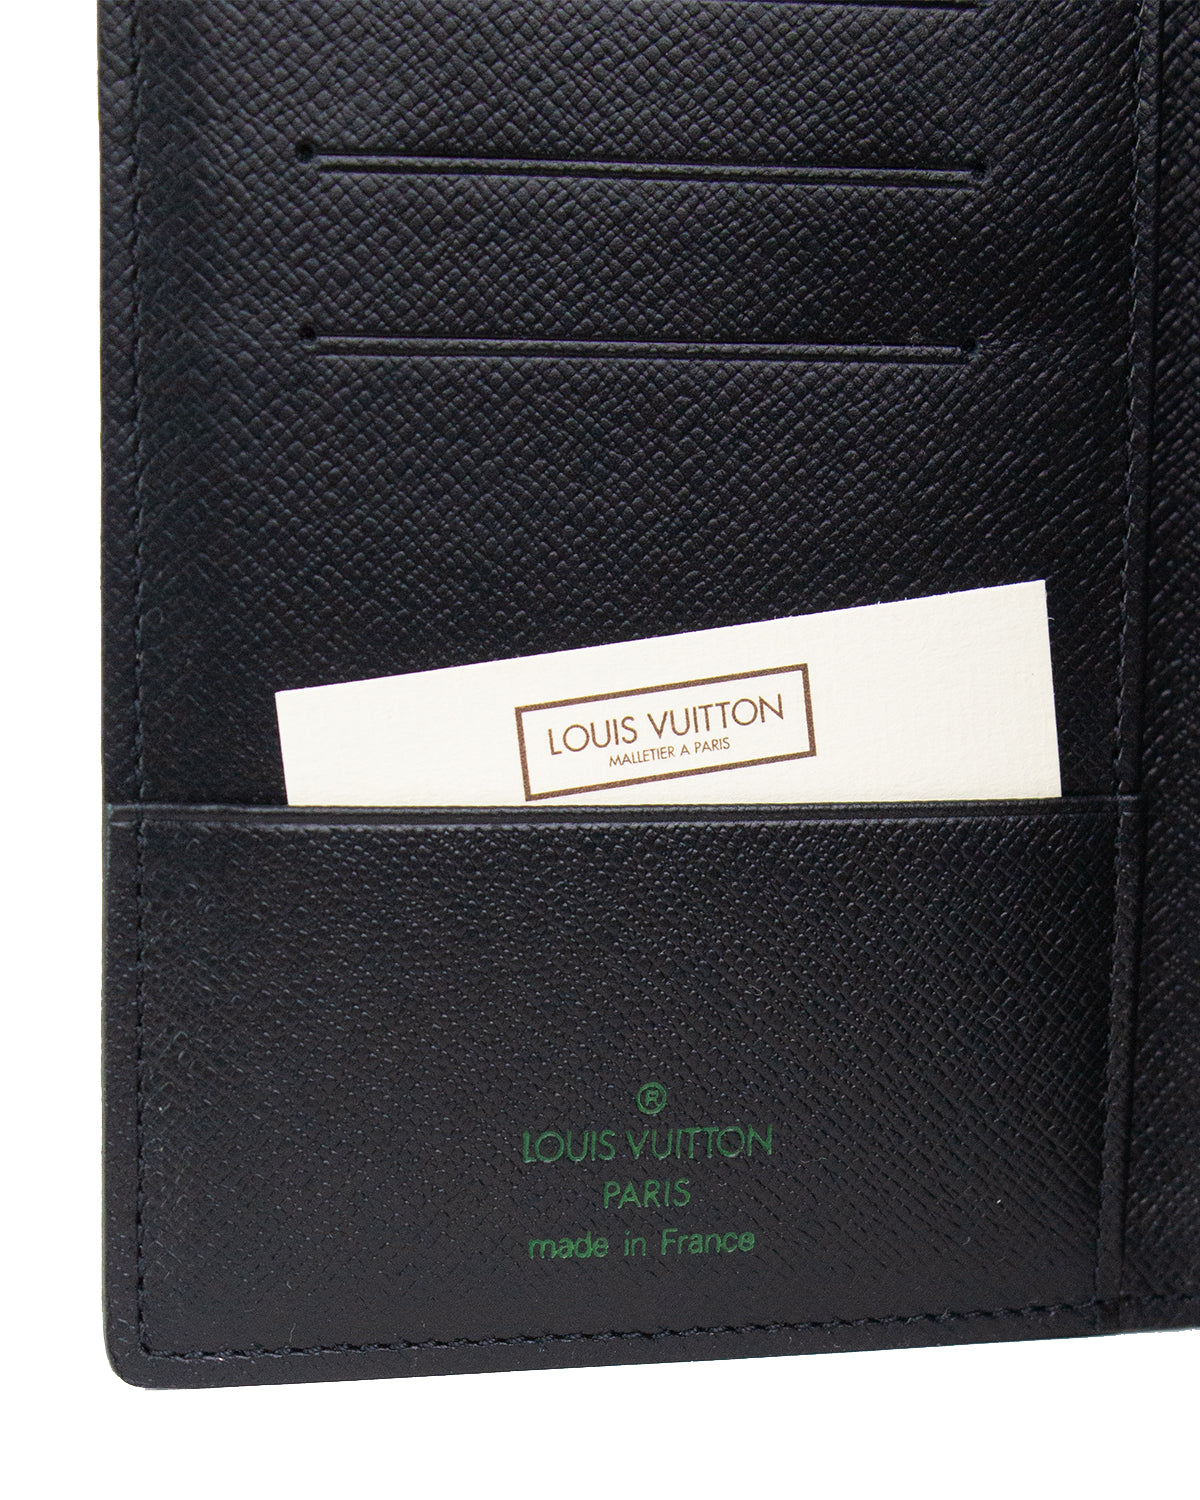 Louis Vuitton Passport Holder 